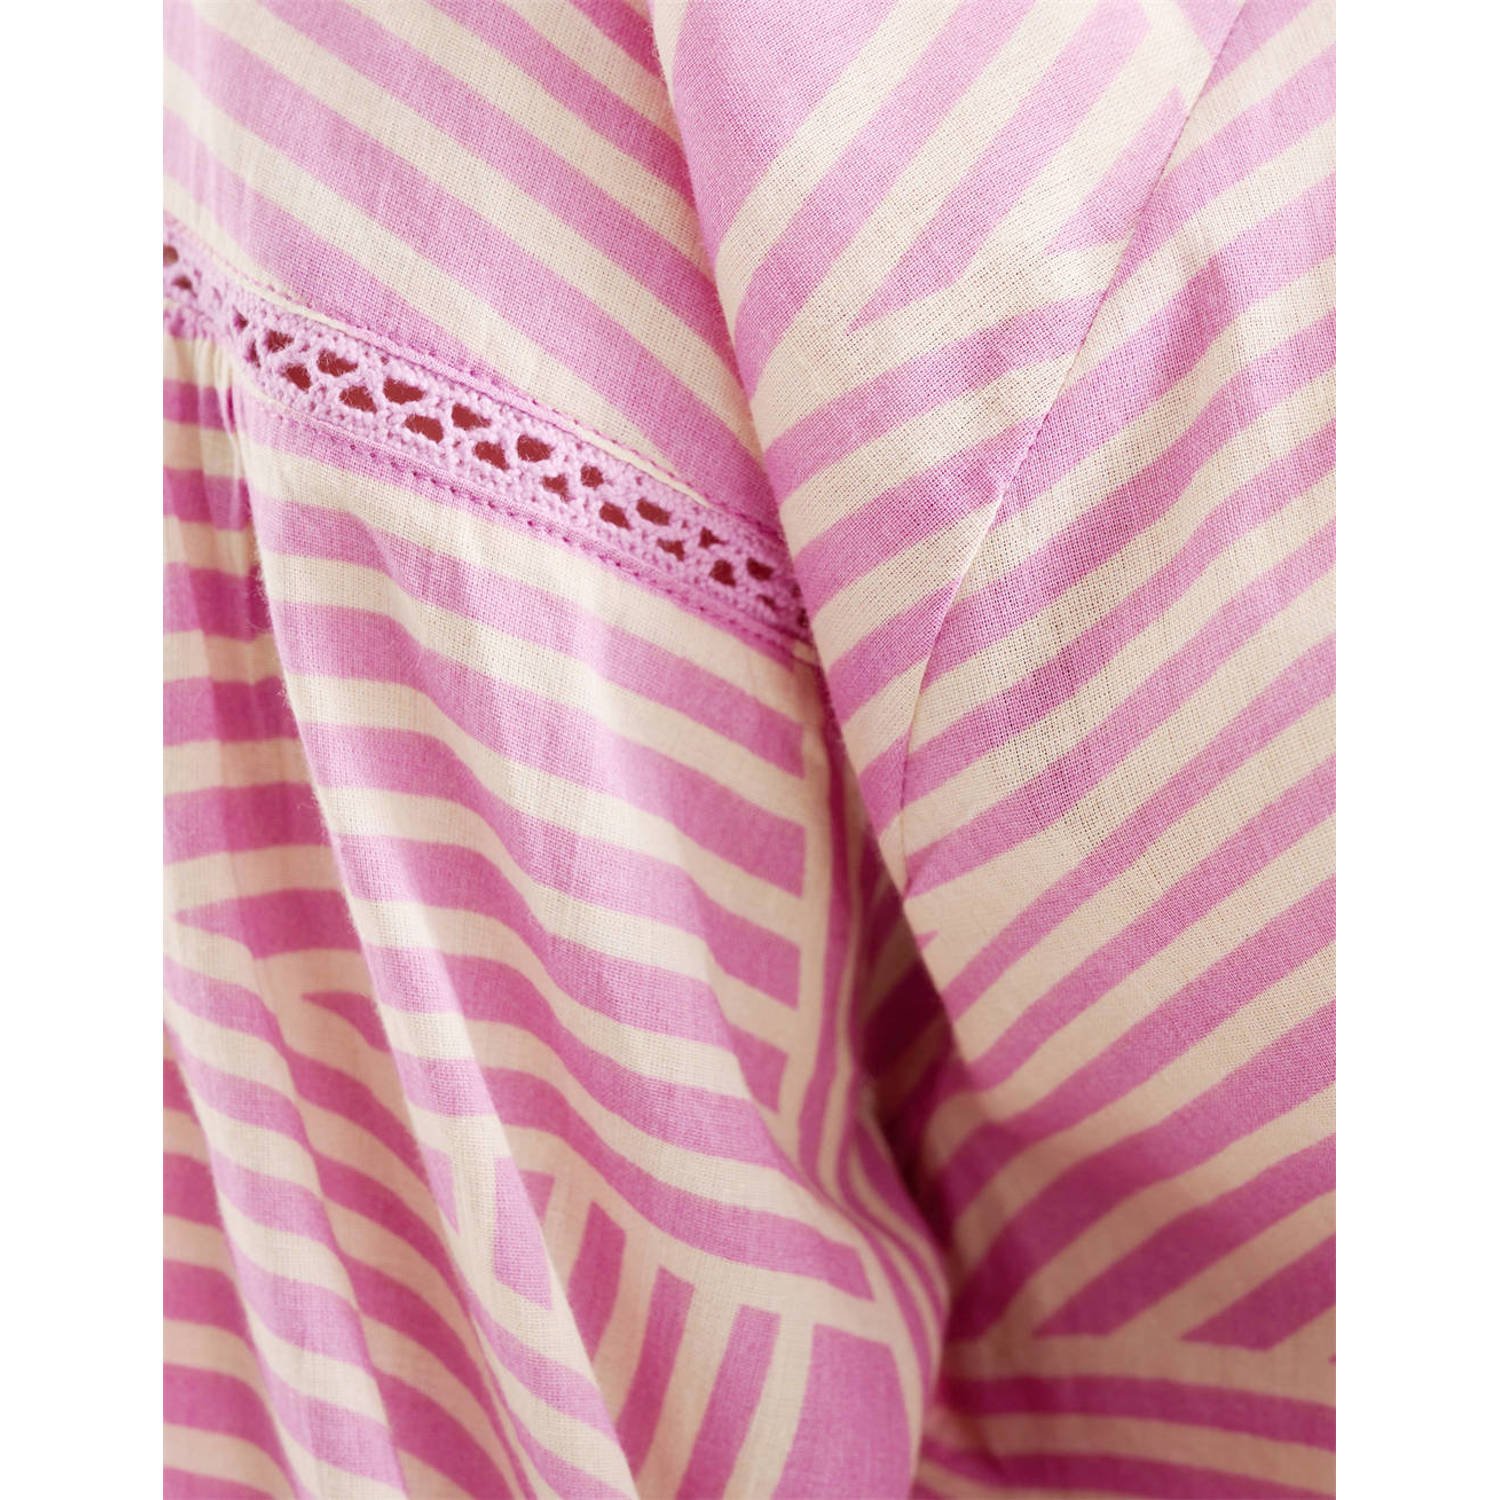 Shoeby blouse met all over print en borduursels roze ecru